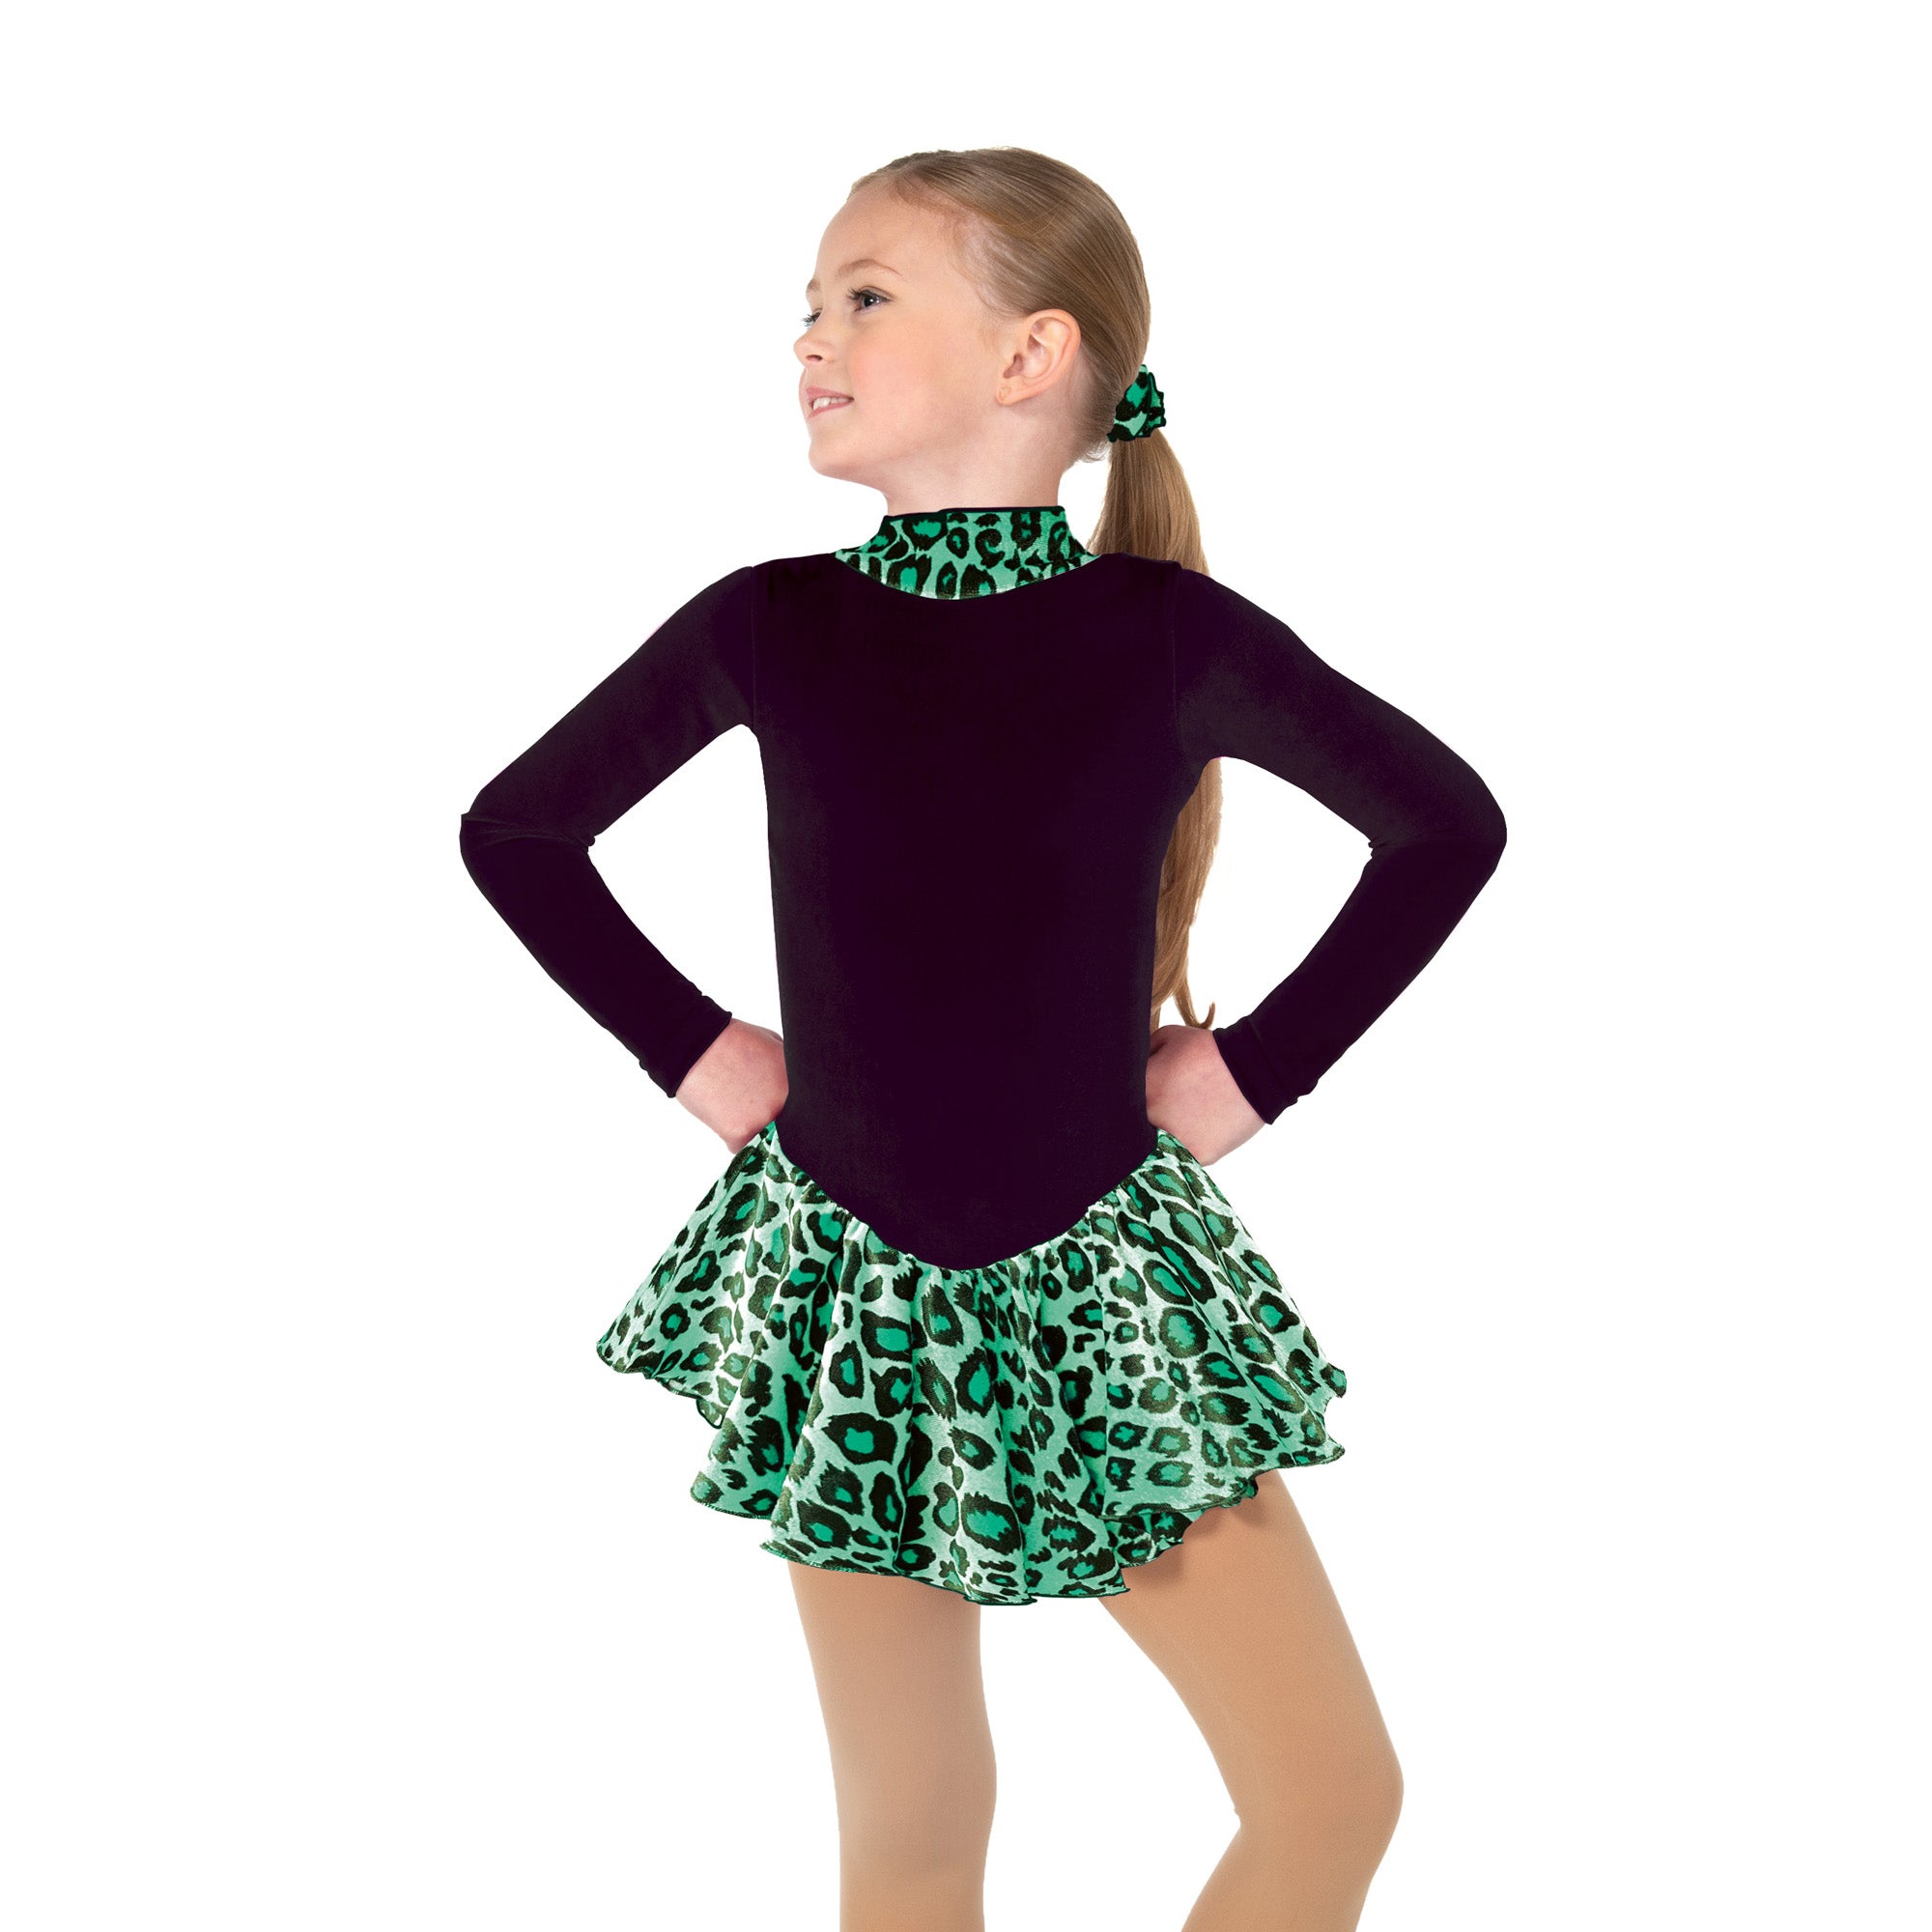 Figureskatingstore on X: Jerry's Ice Skating Dress 95 - Esplanade   Jerry's Ice Skating Dress 96 - Black Lights   Figure Skating Dresses:   #dress #dresses #figureskatingdresses